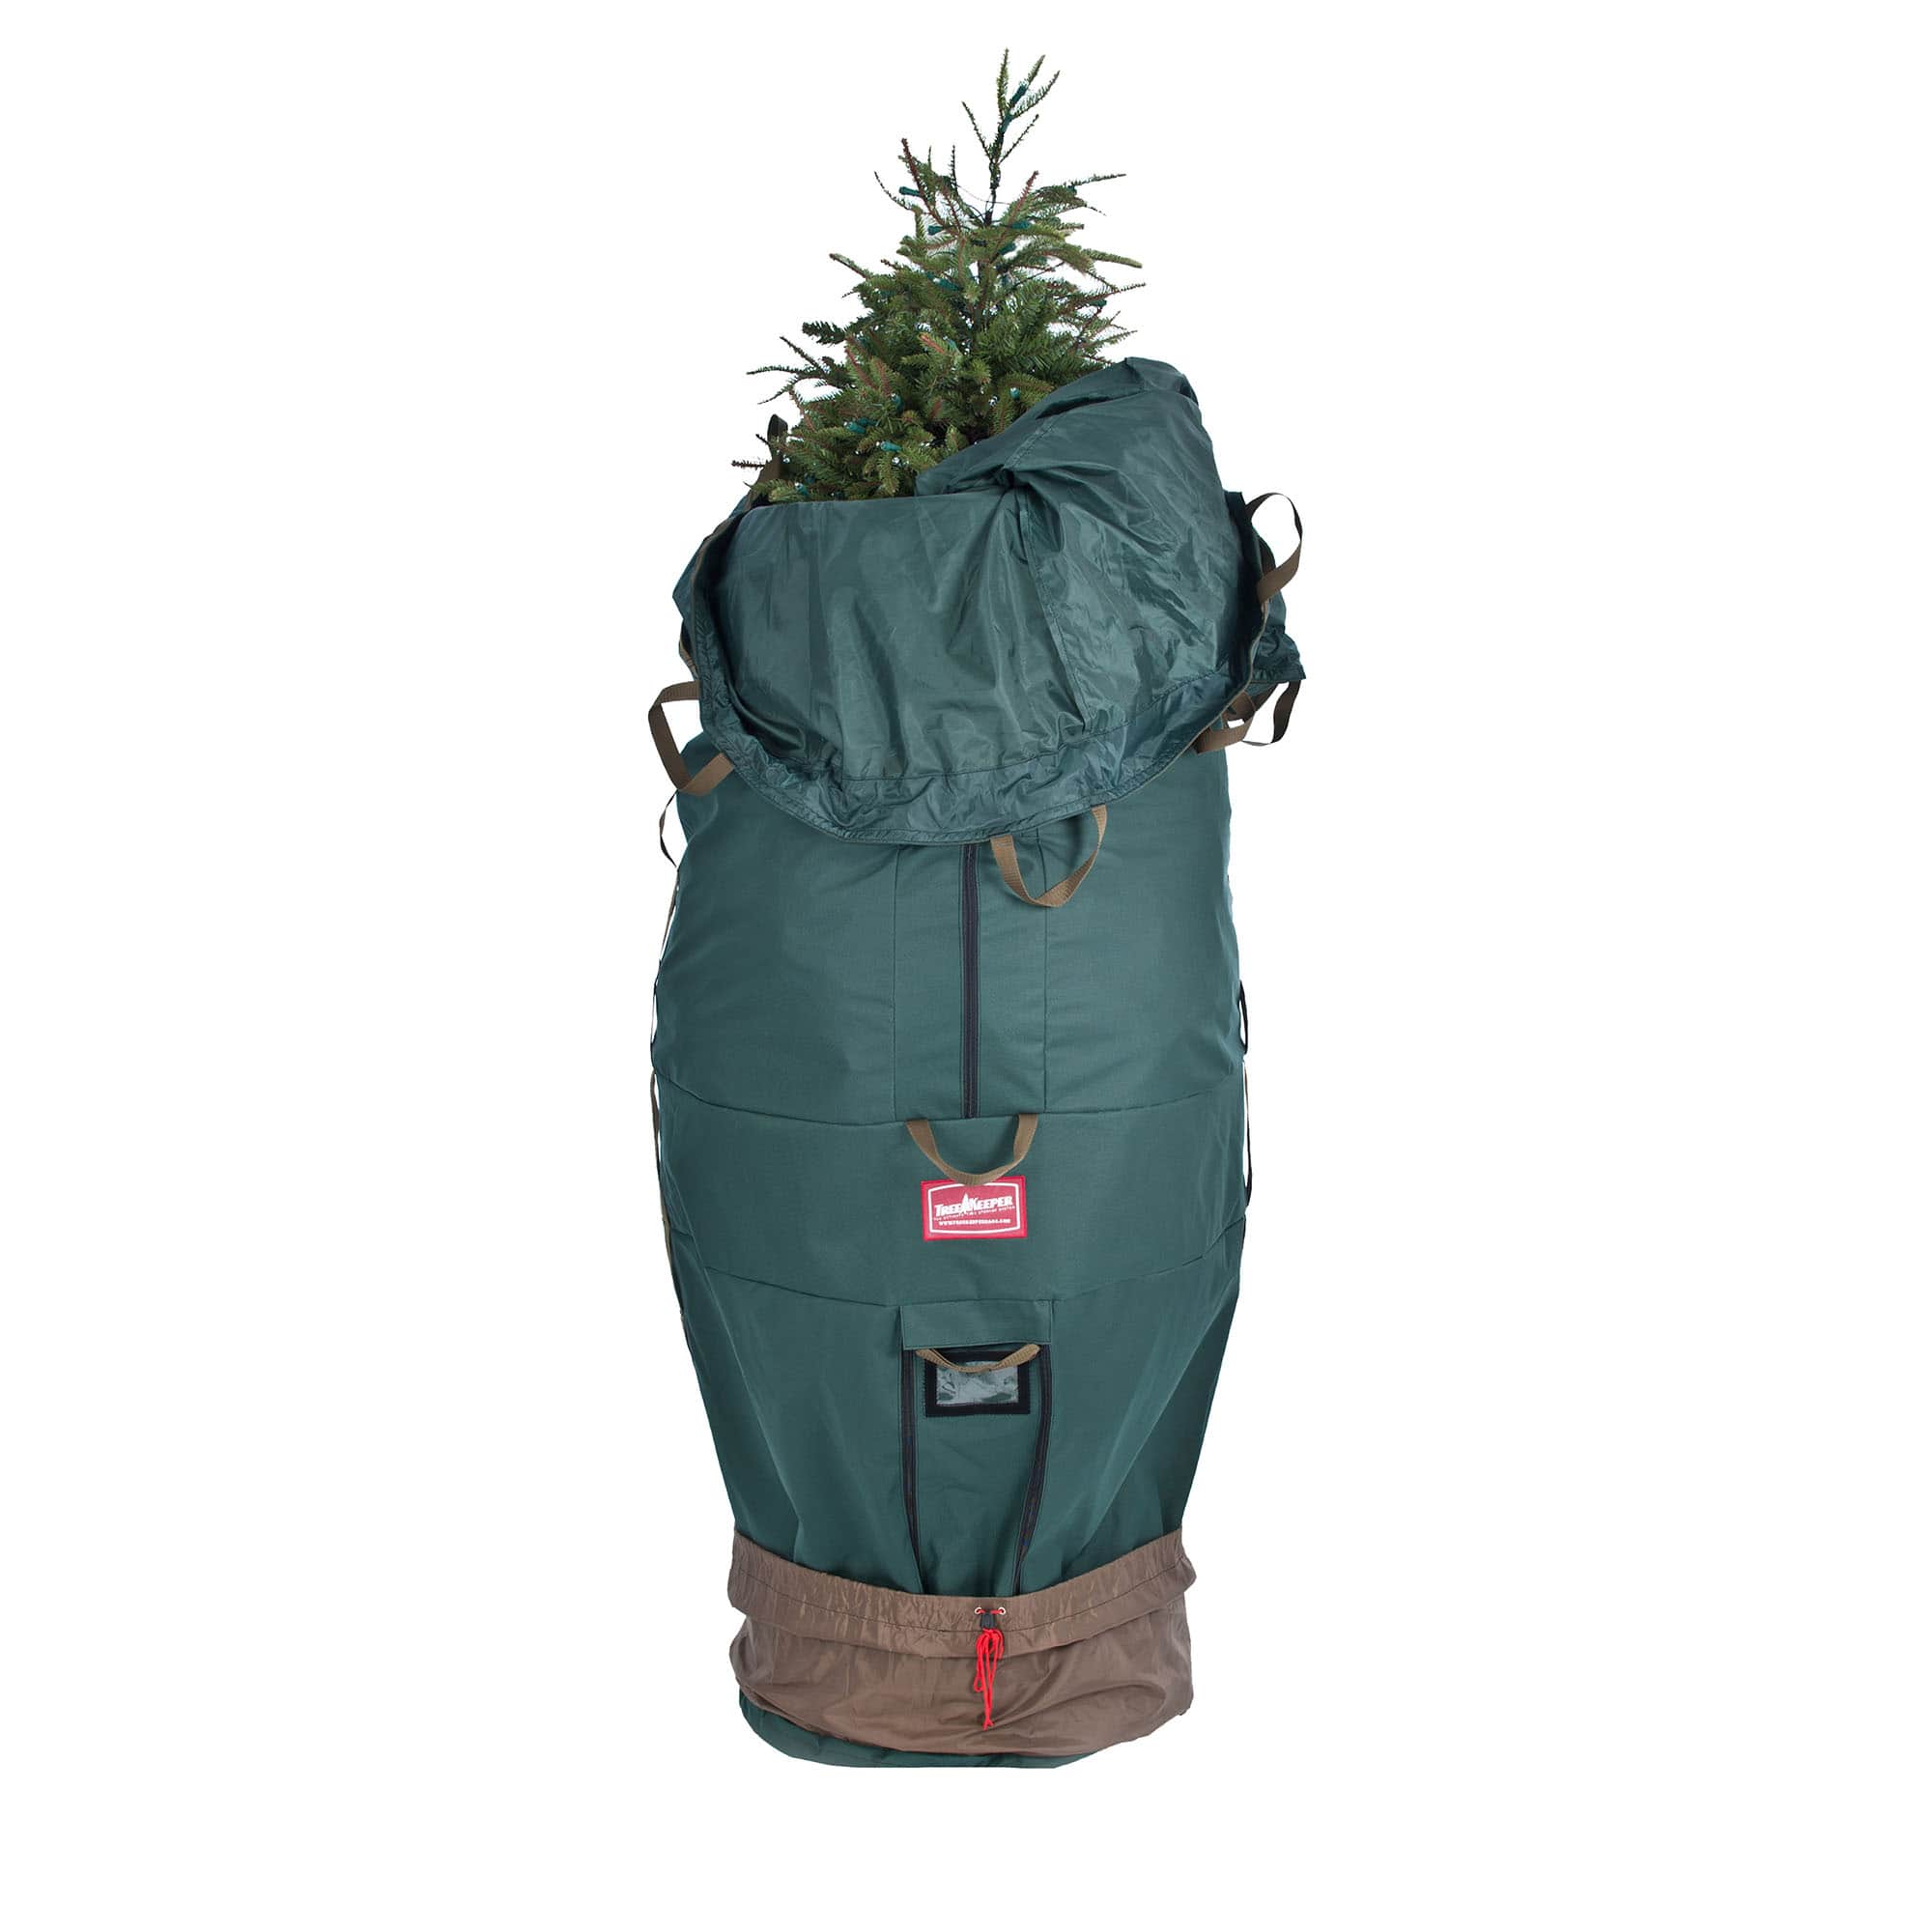 TreeKeeper 7-9ft. Large Girth Upright Tree Storage Bag